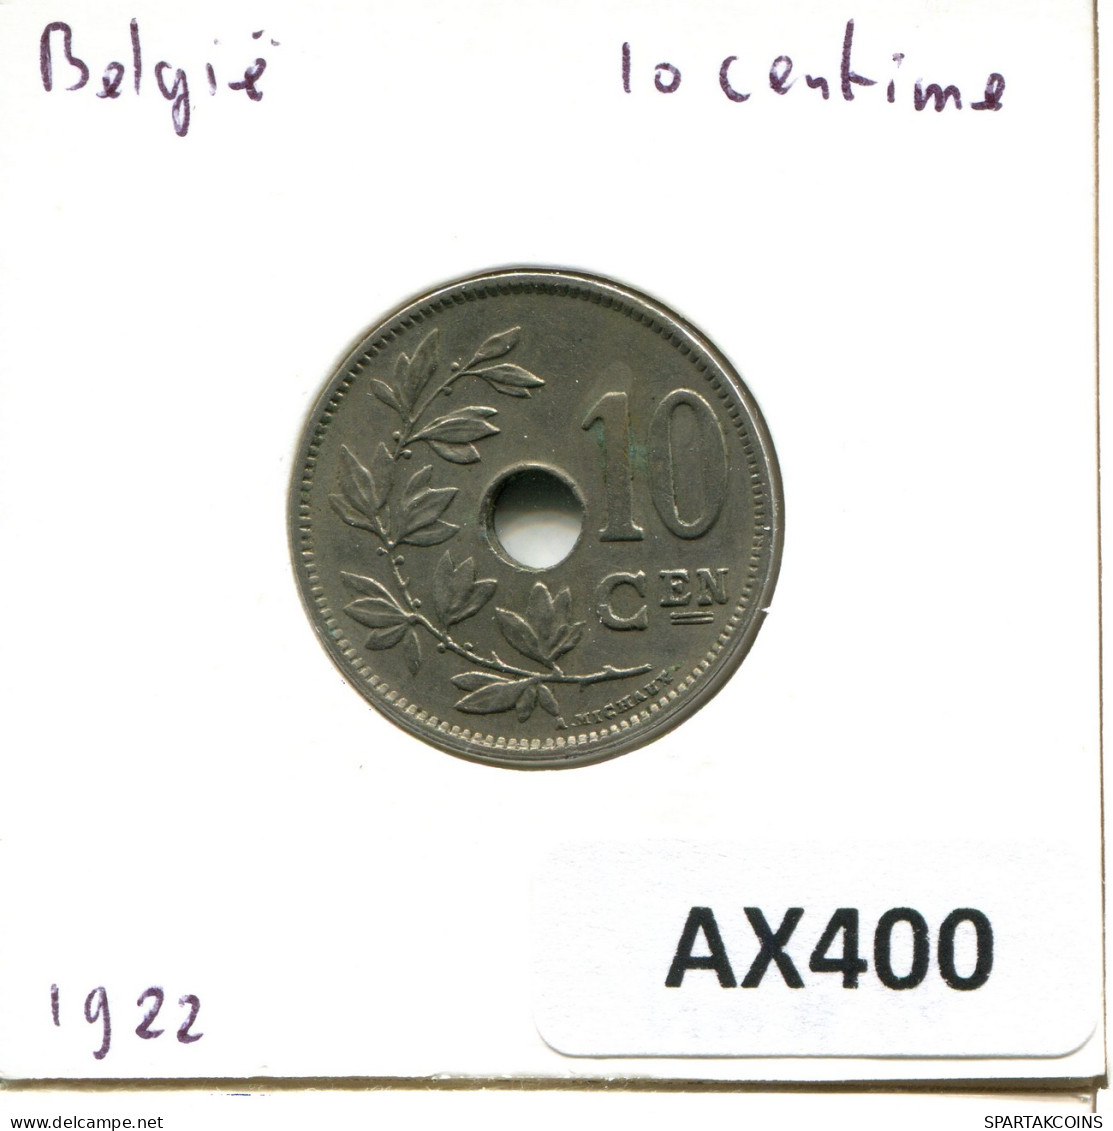 10 CENTIMES 1922 BELGIUM Coin DUTCH Text #AX400.U - 10 Cents